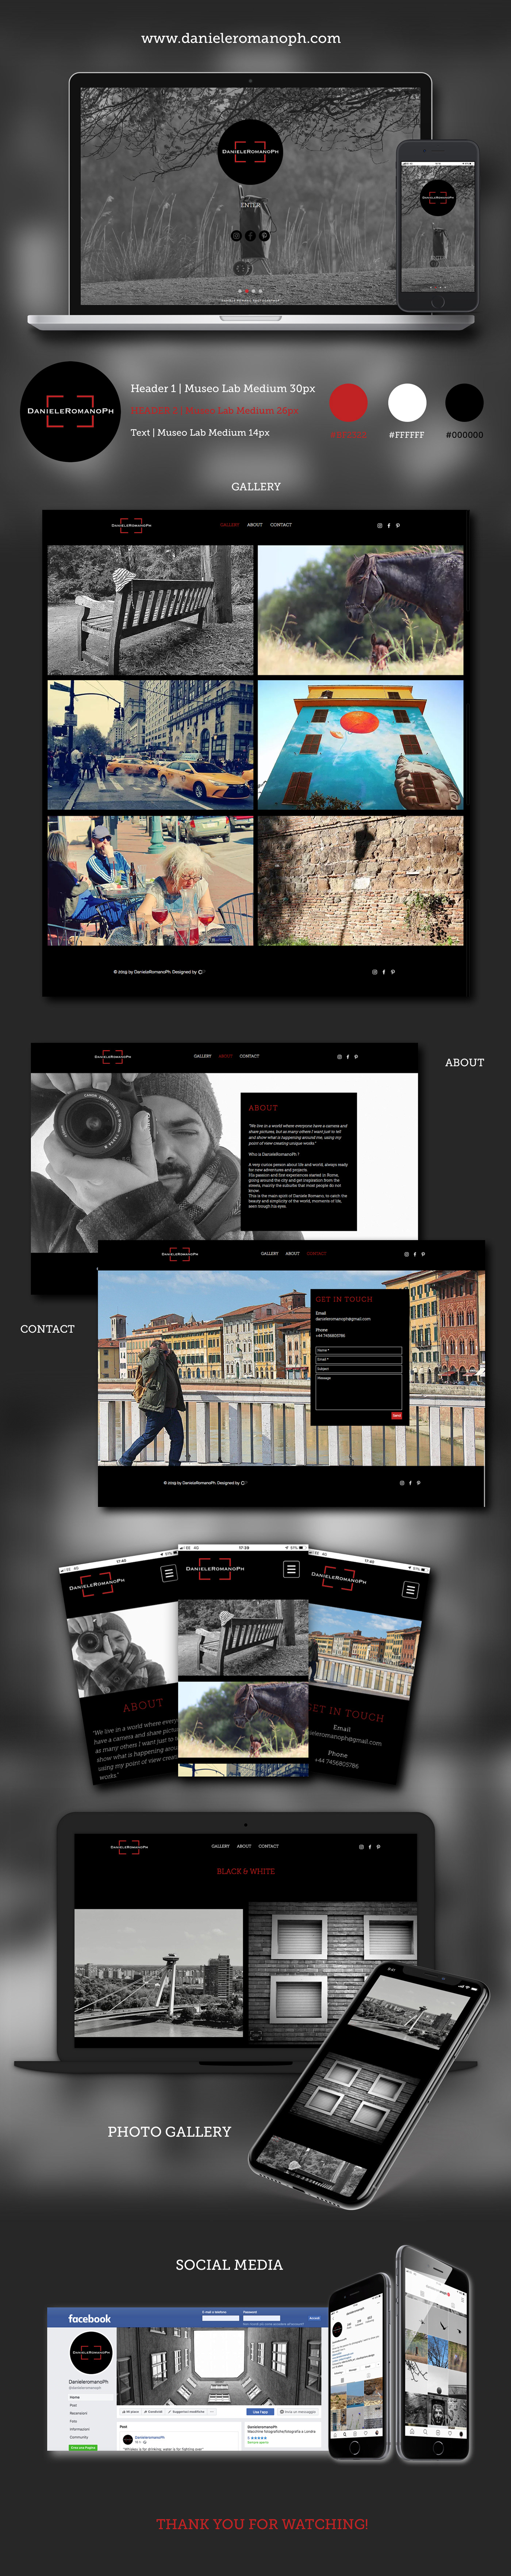 Website Photography  ui design UX design responsive website photogallery portfolio